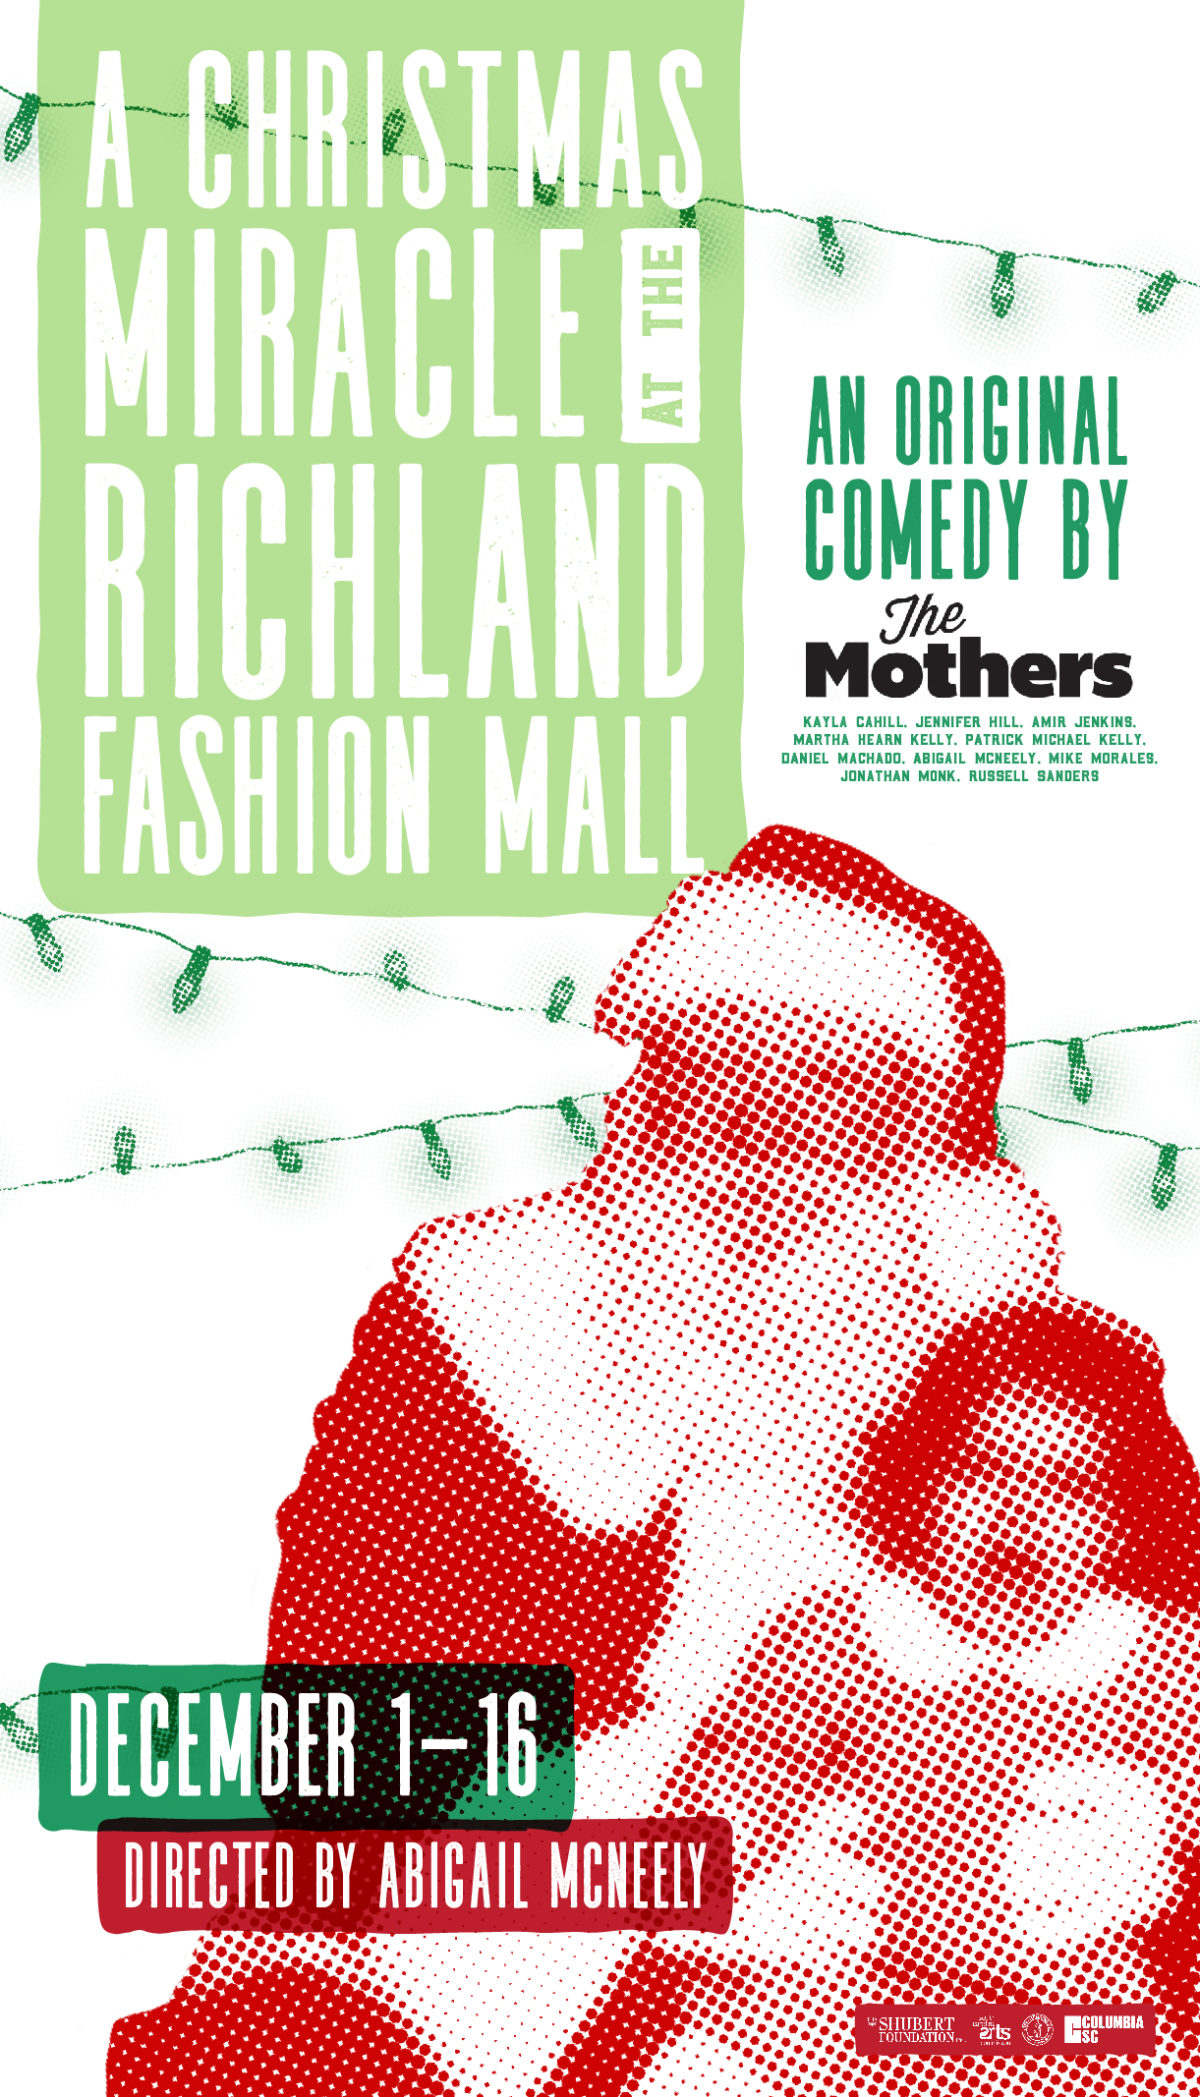 A Christmas Miracle at the Richland Fashion Mall